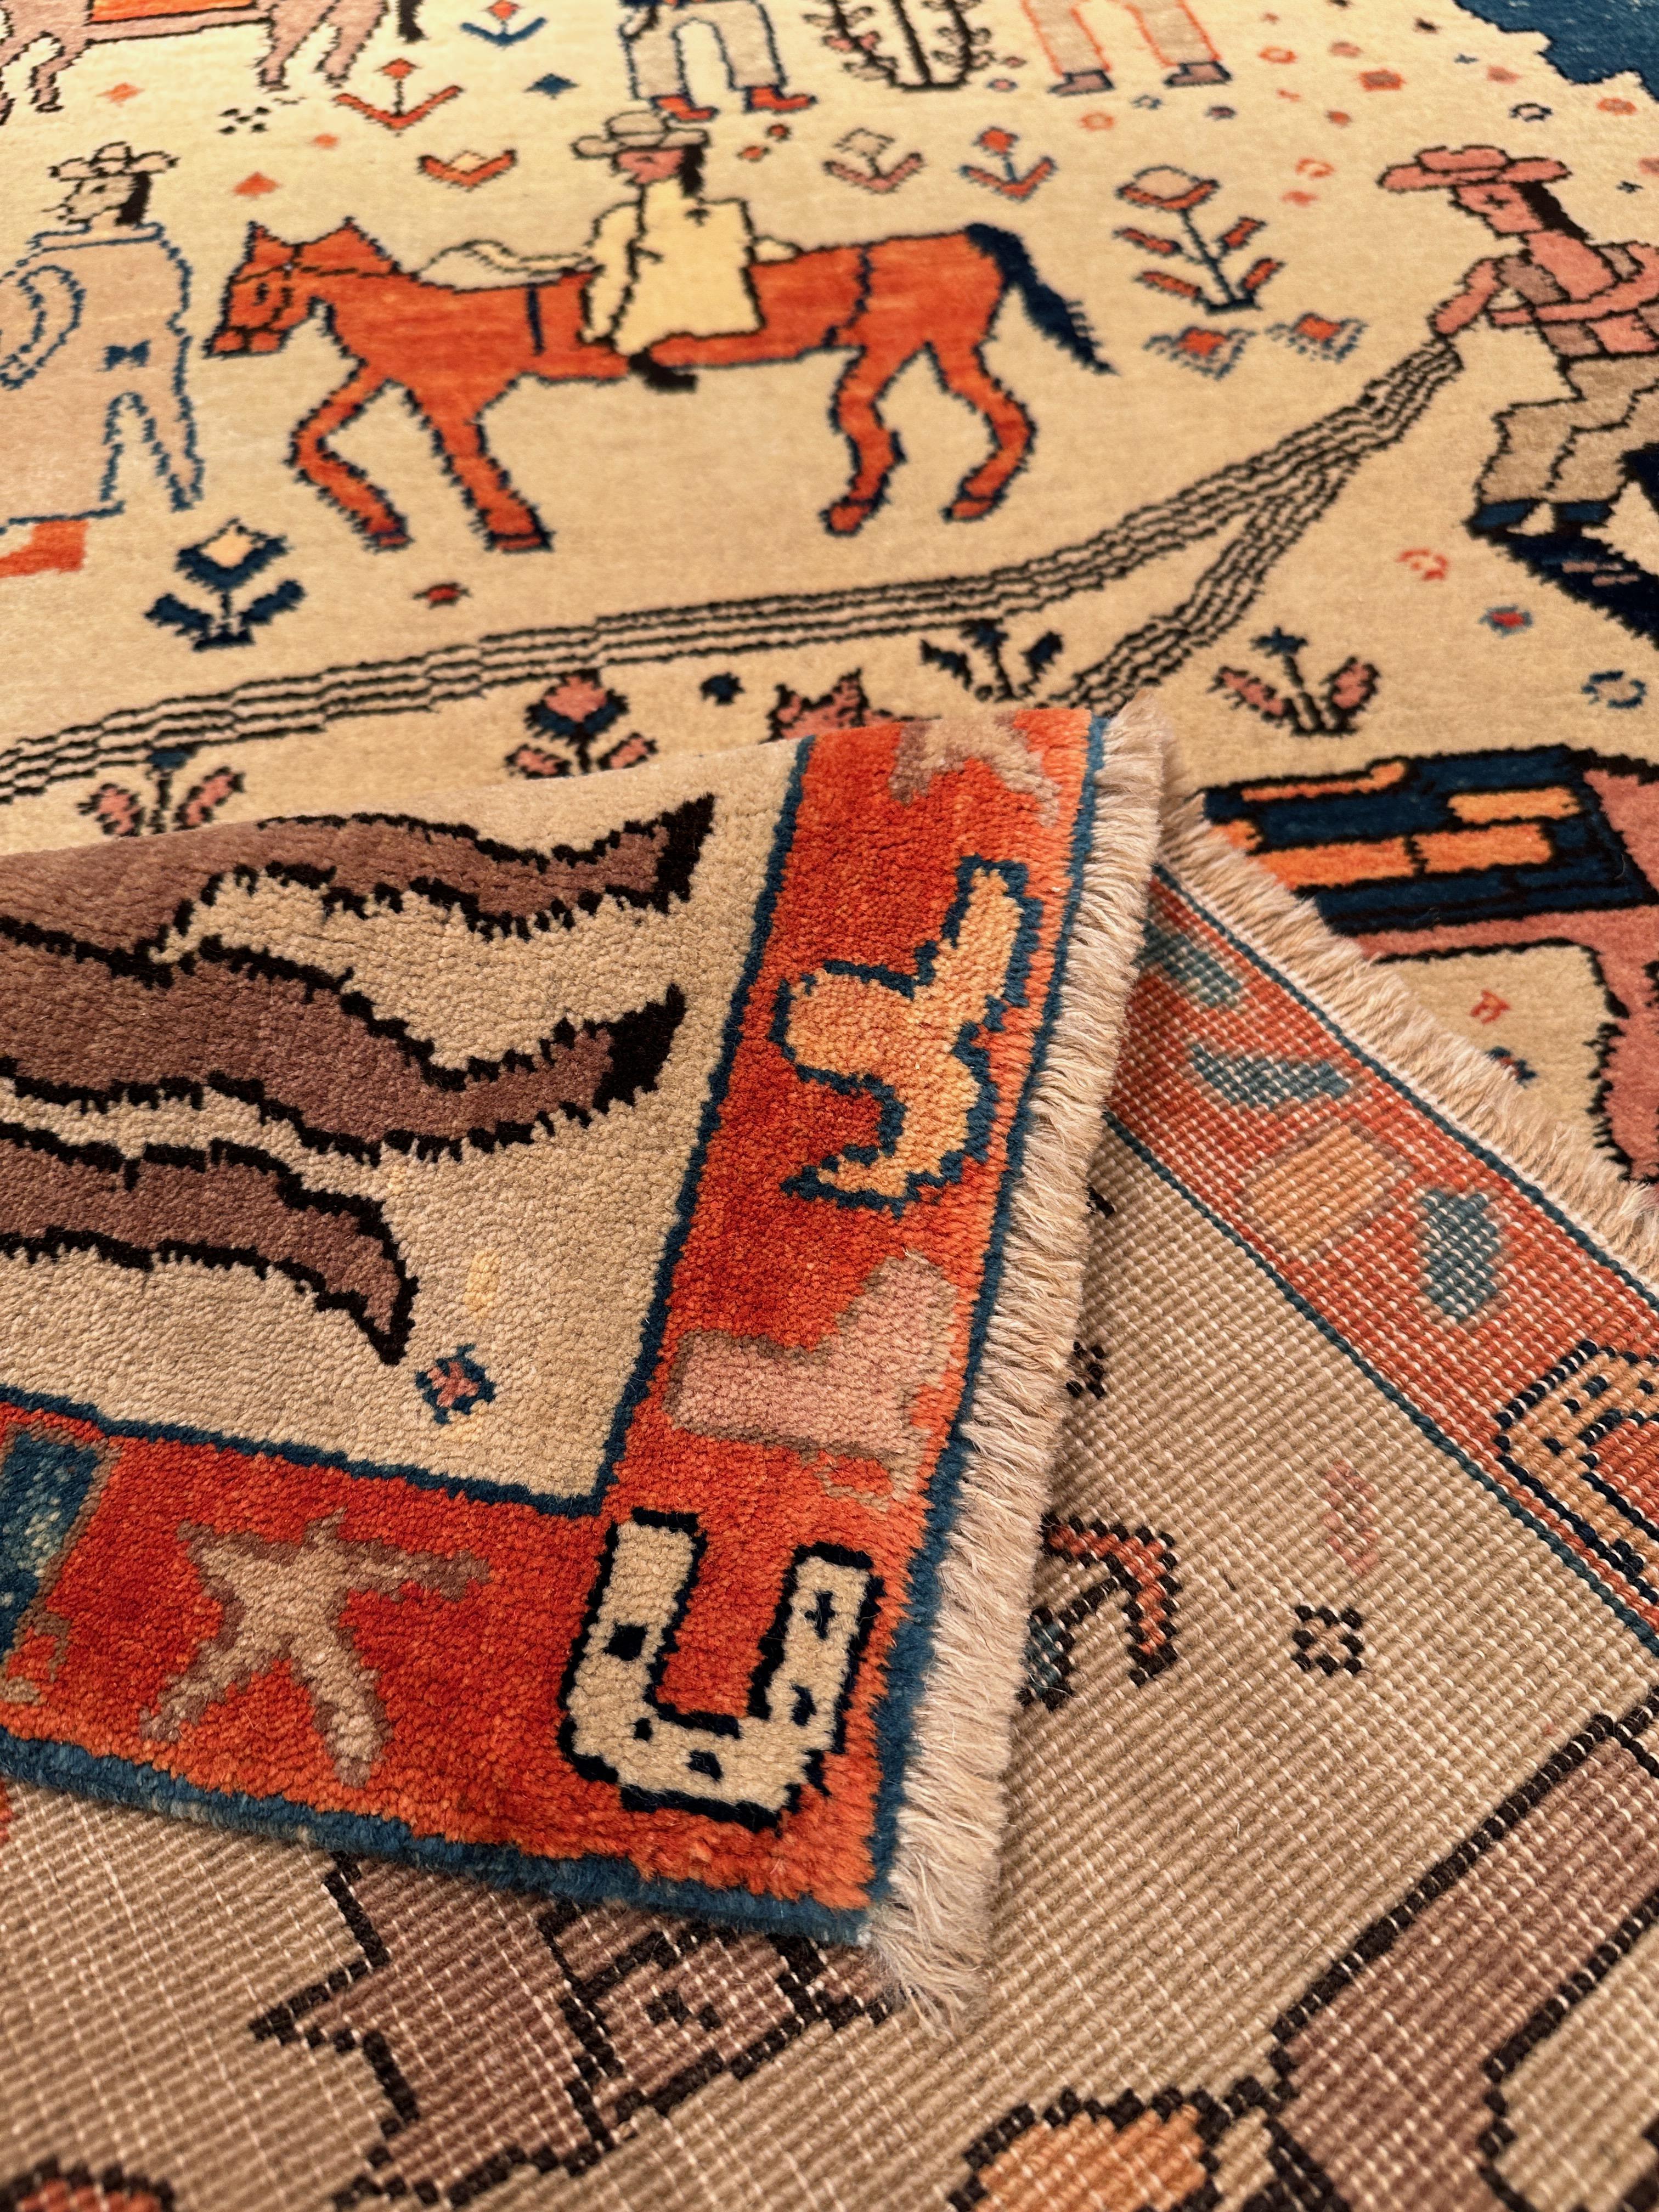 western theme rugs